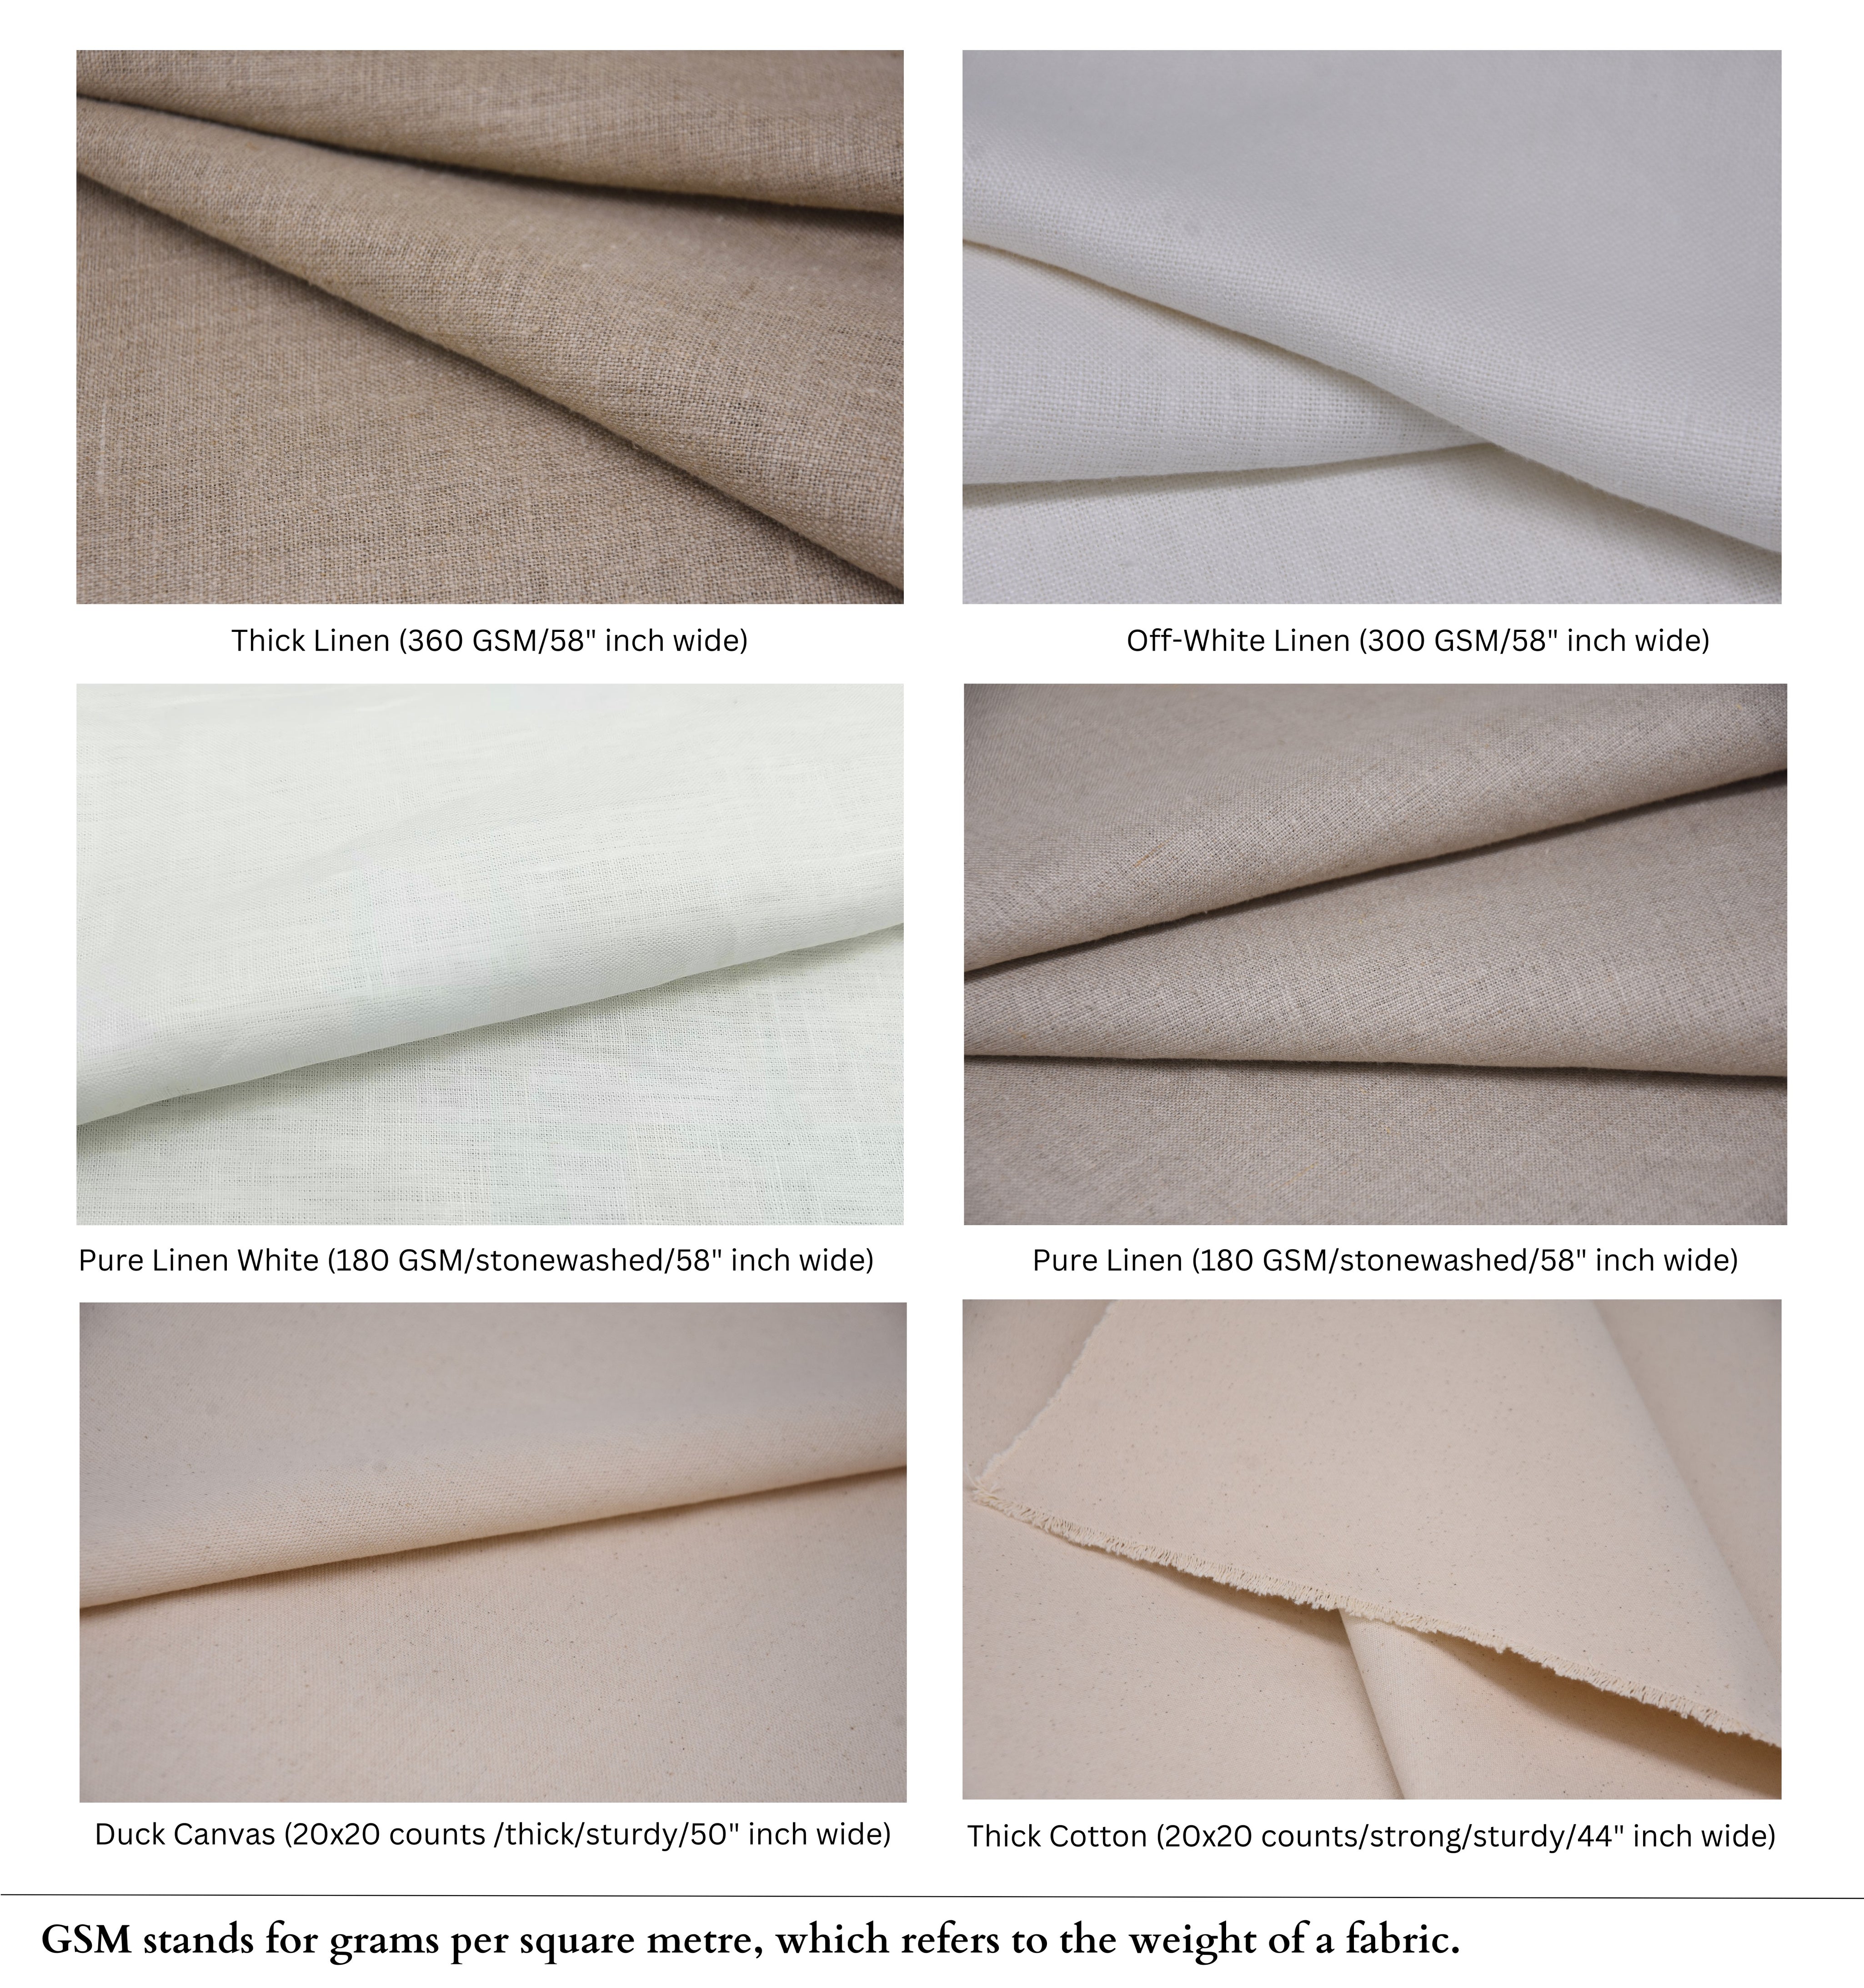 Block Print Linen Fabric, Keri Jaal   Block Print  Handloom Linen,By Yard Linen Fabric, Block Print Fabric, Fabric From India, Homedecors, Upholsteryfurnishing